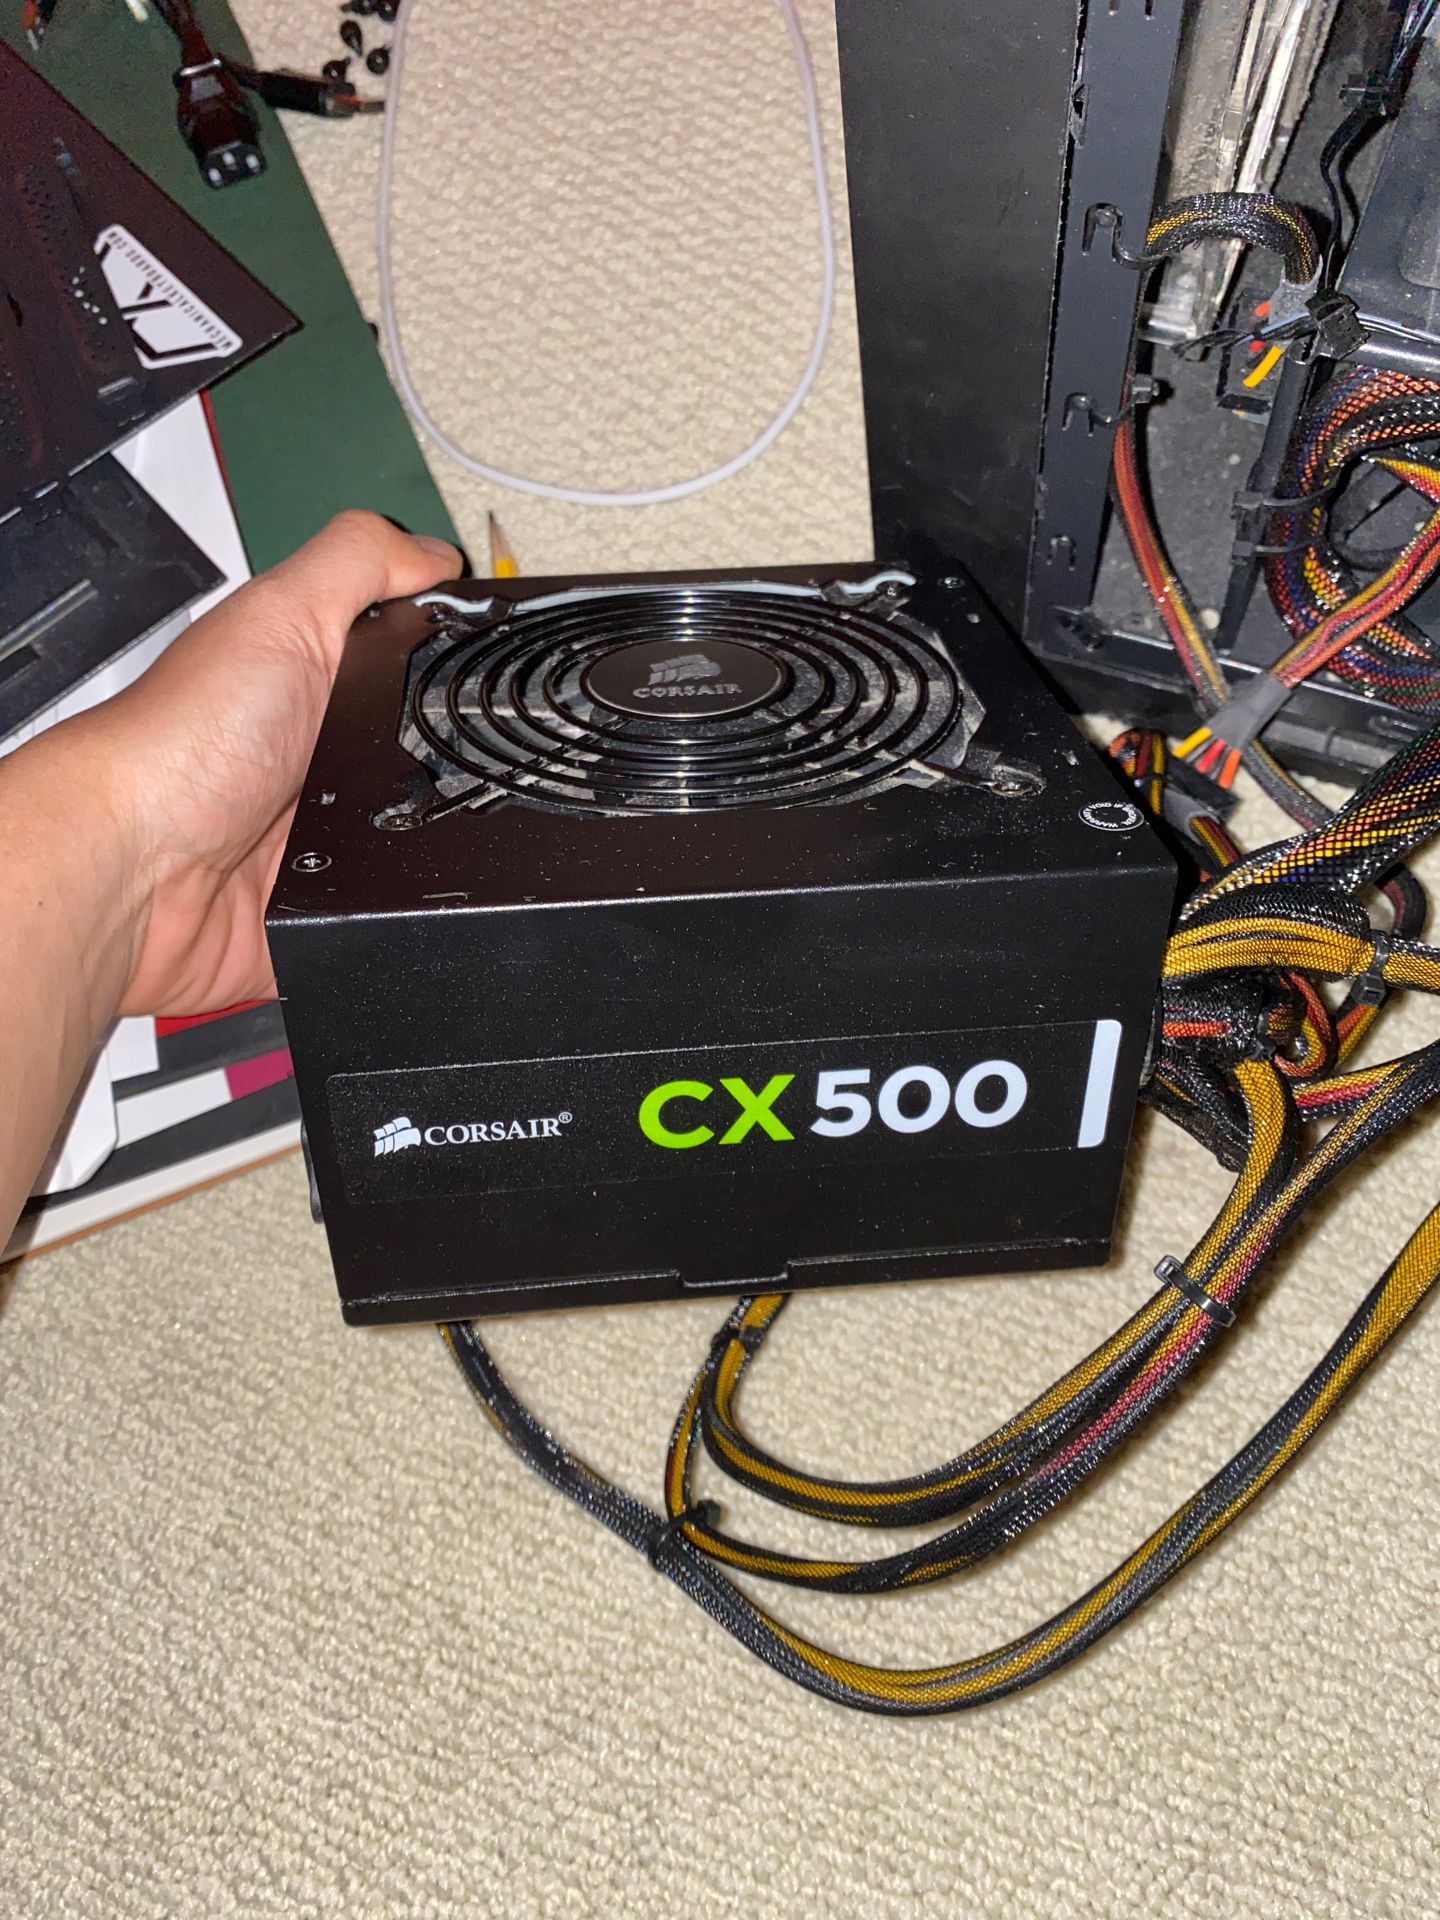 CX 500 power supply